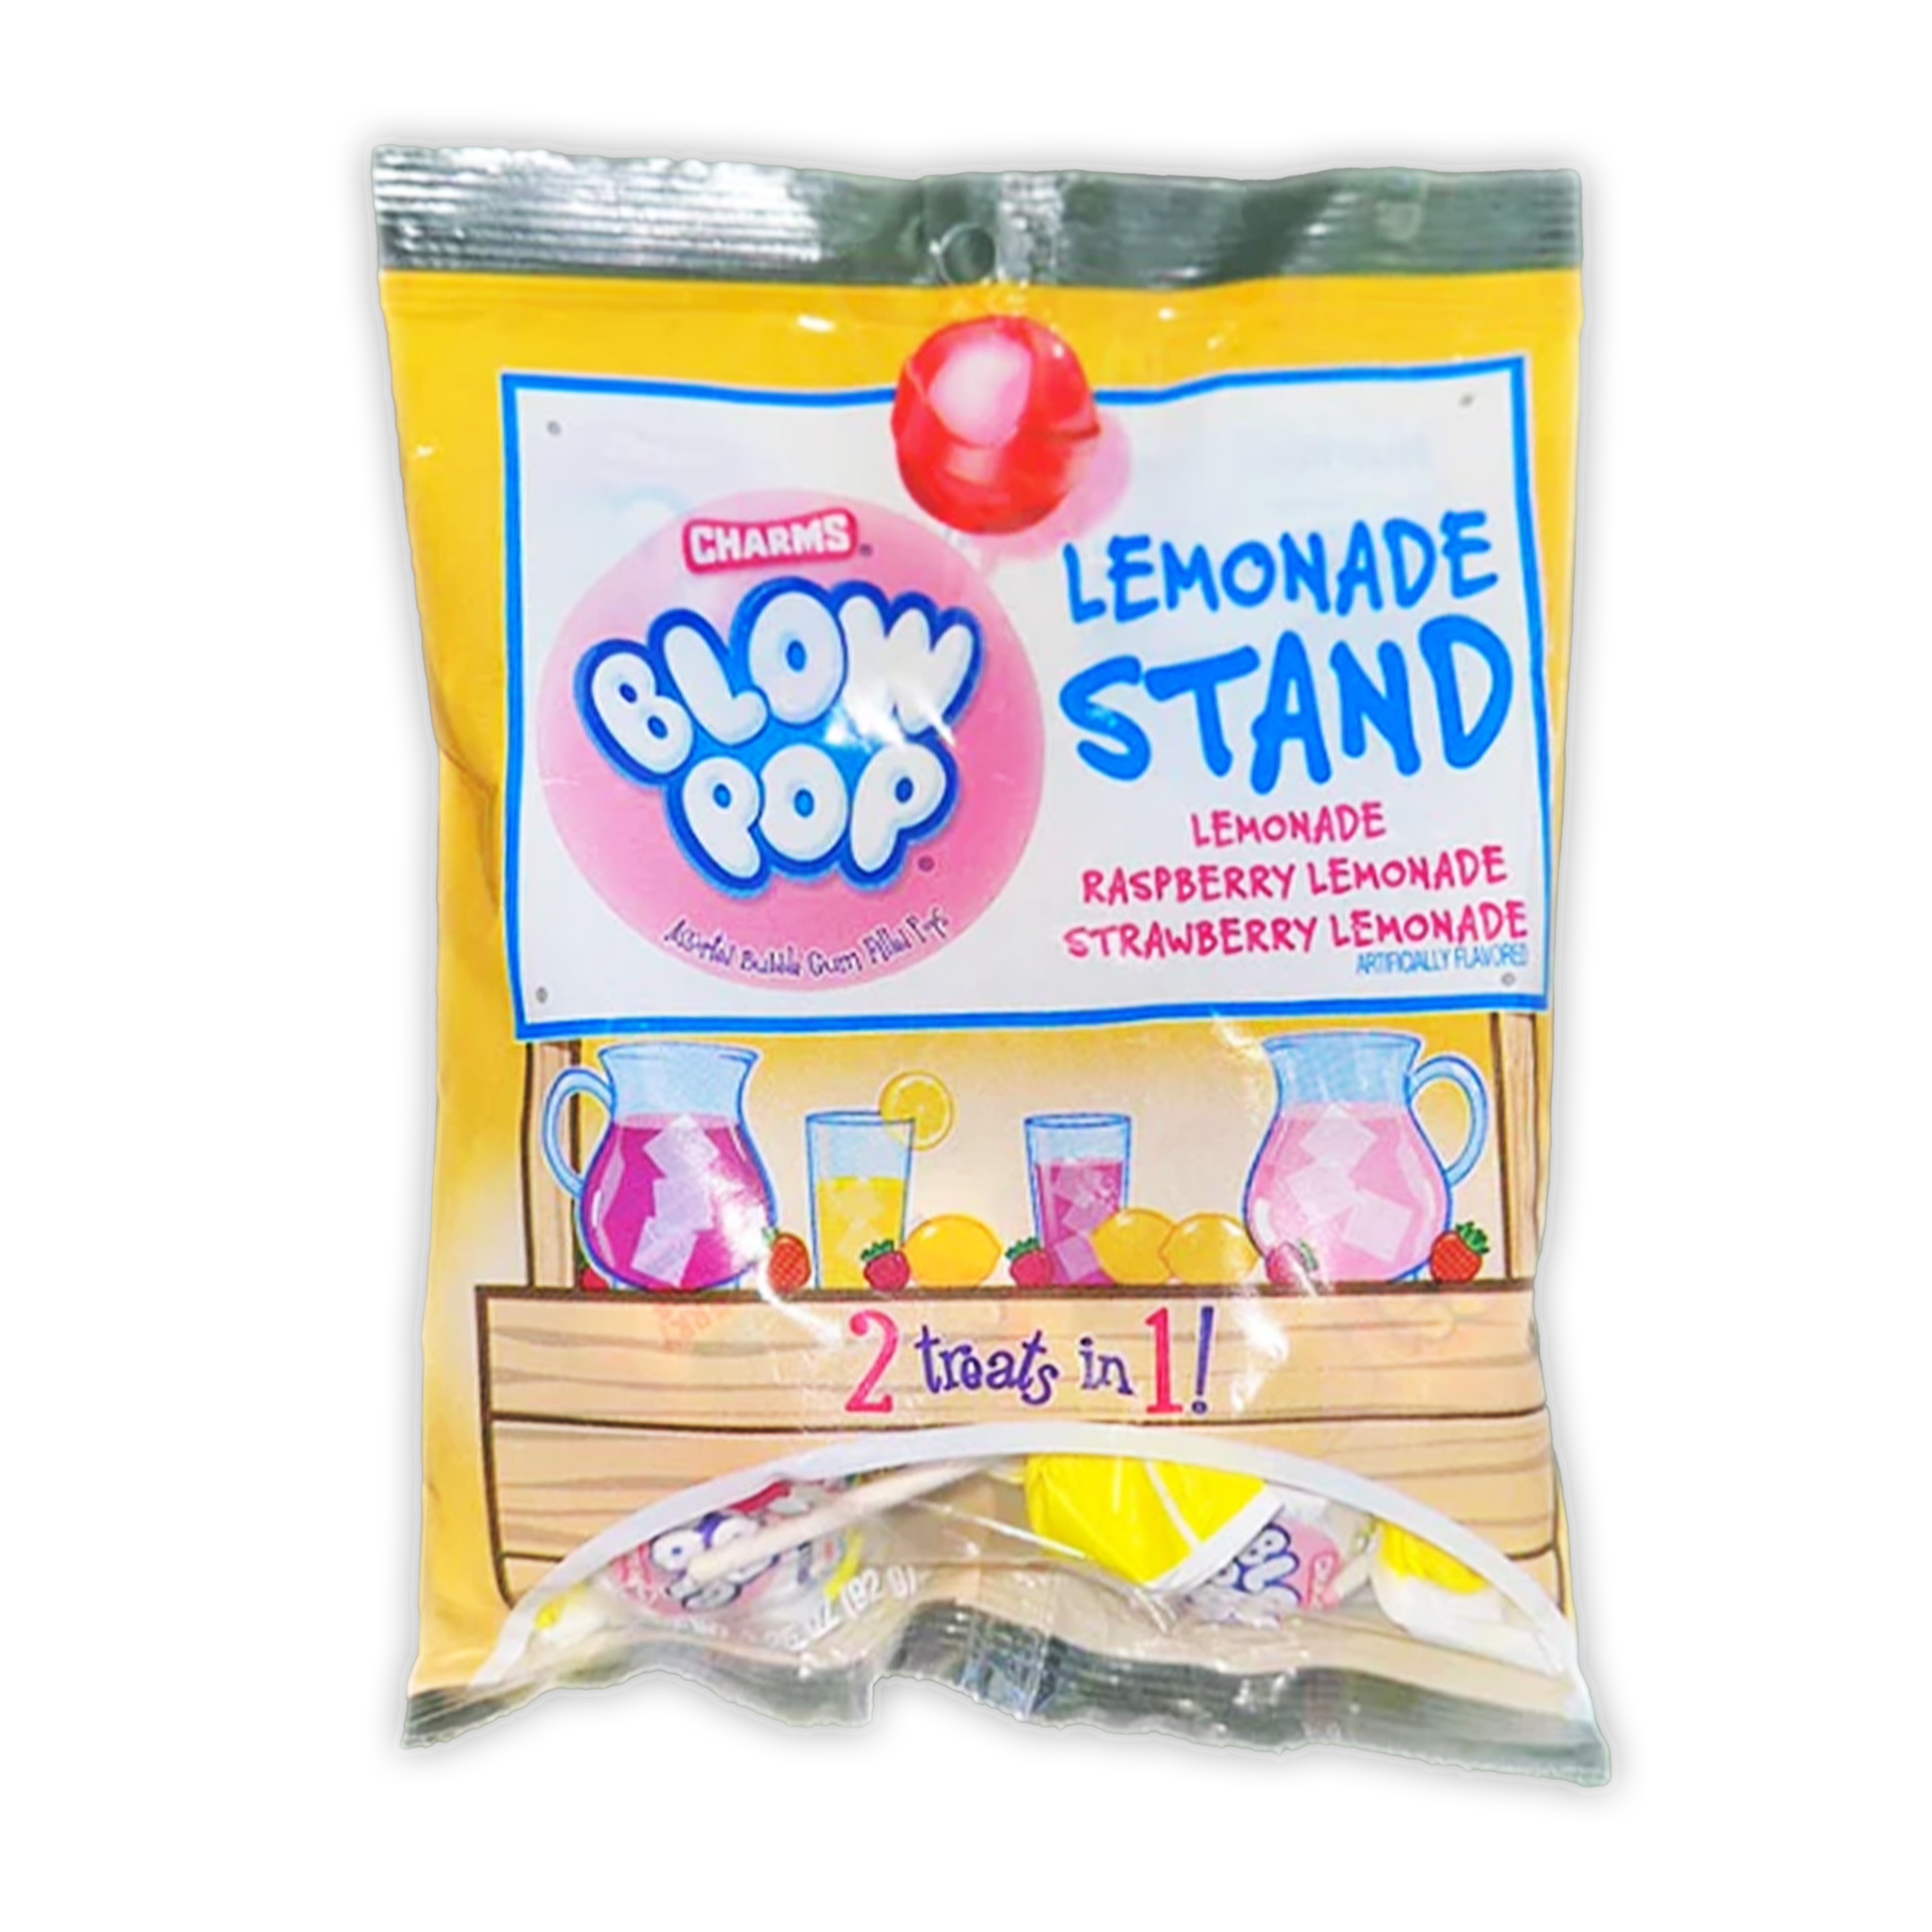 Charms Blow Pop - Lemonade Stand